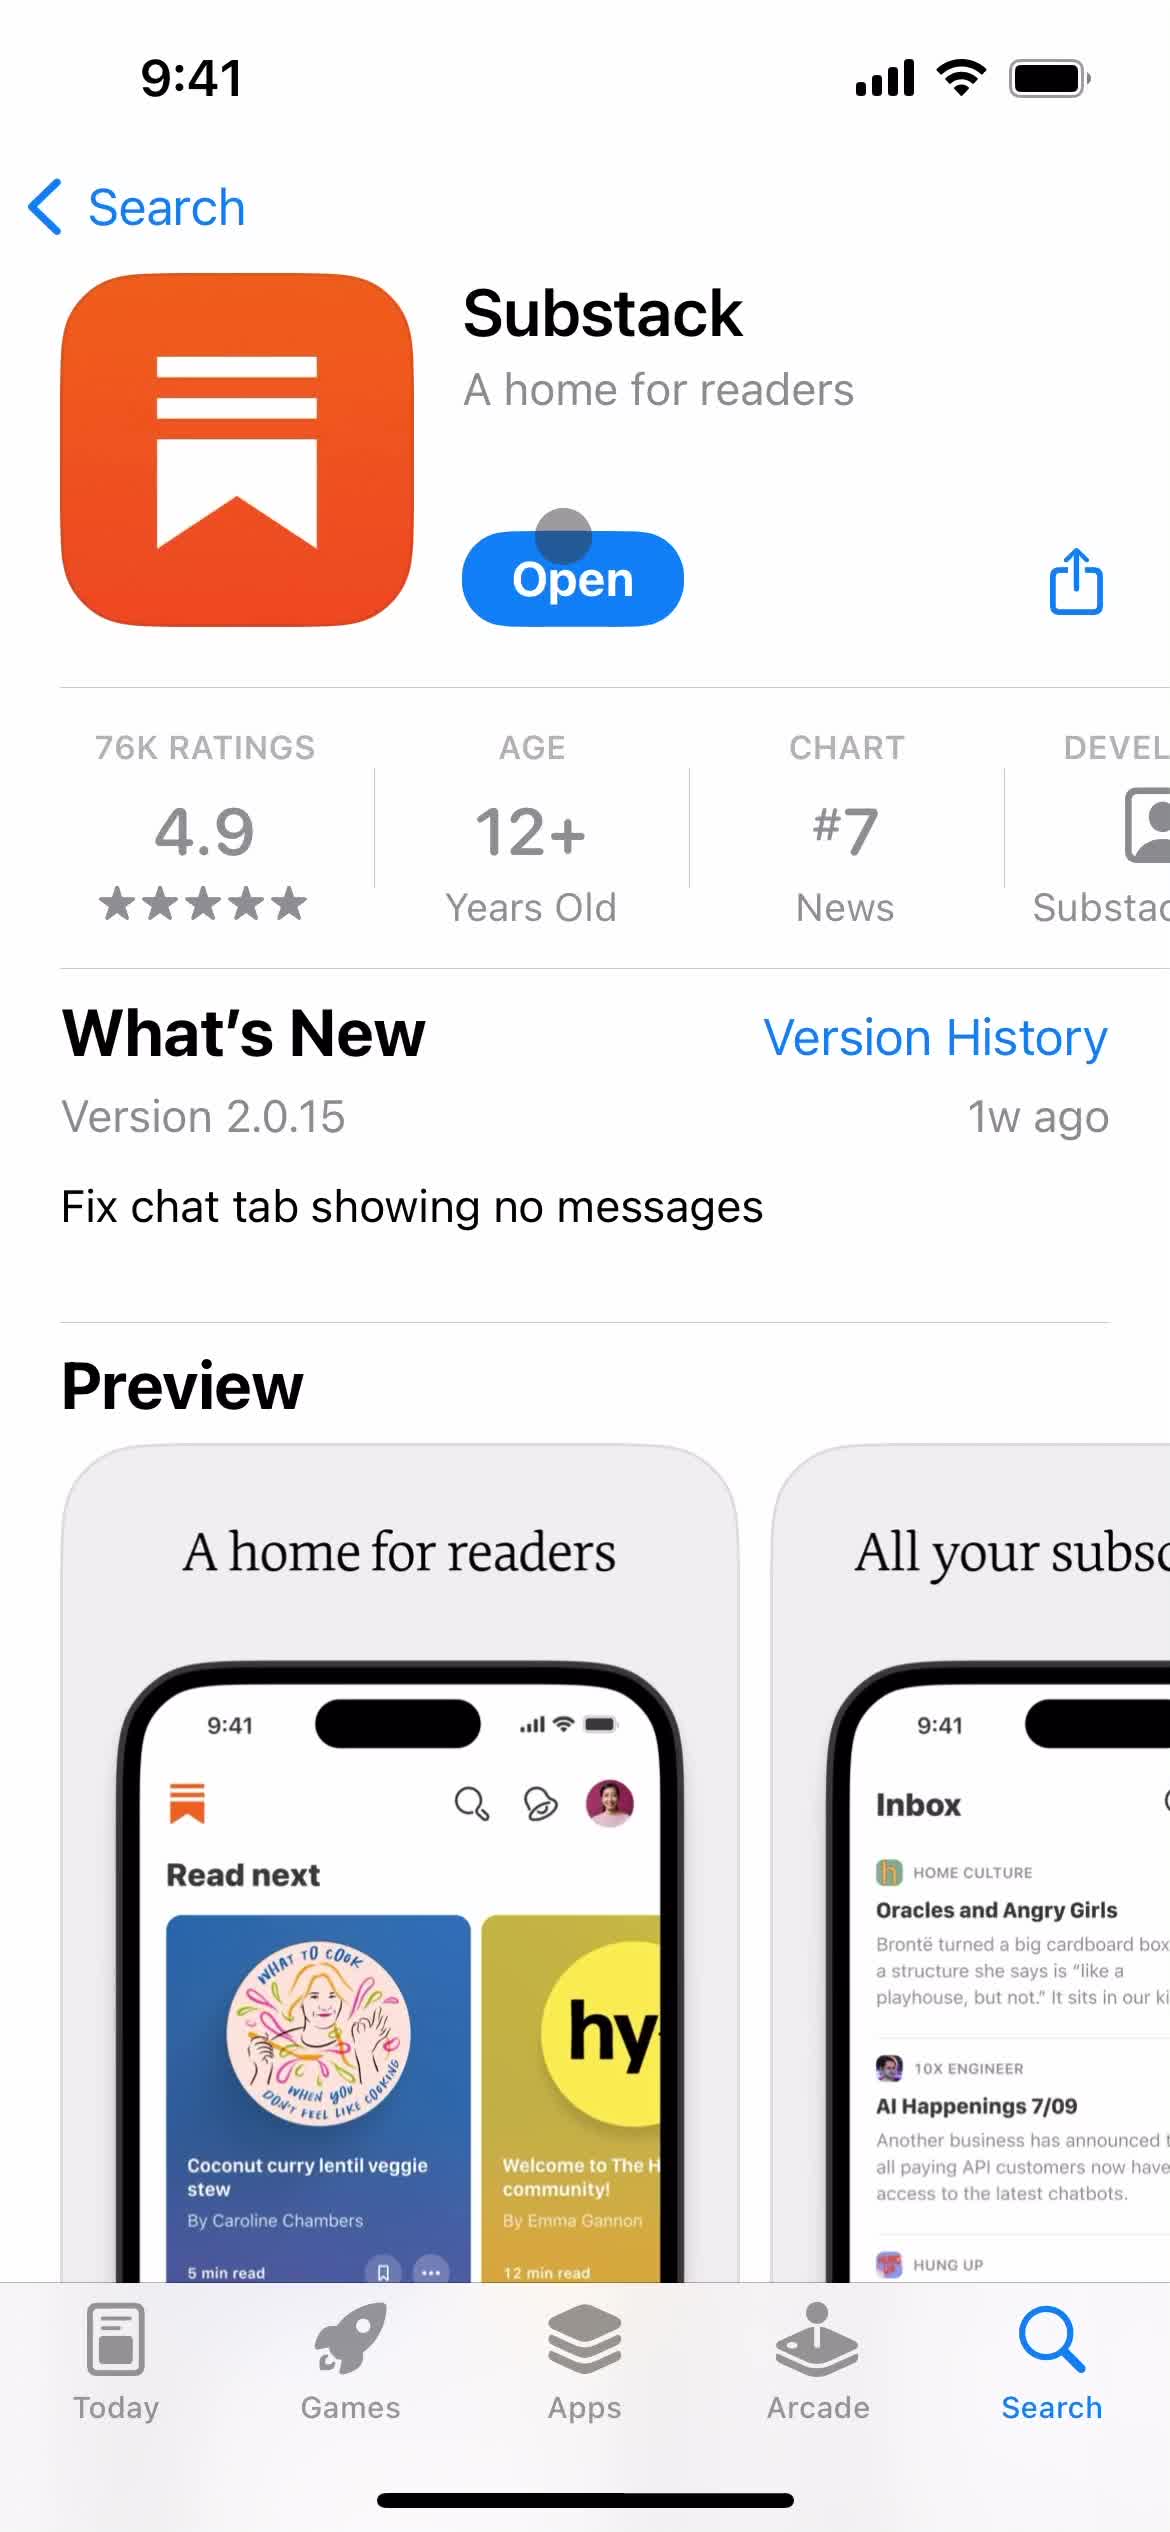 Substack app store listing screenshot